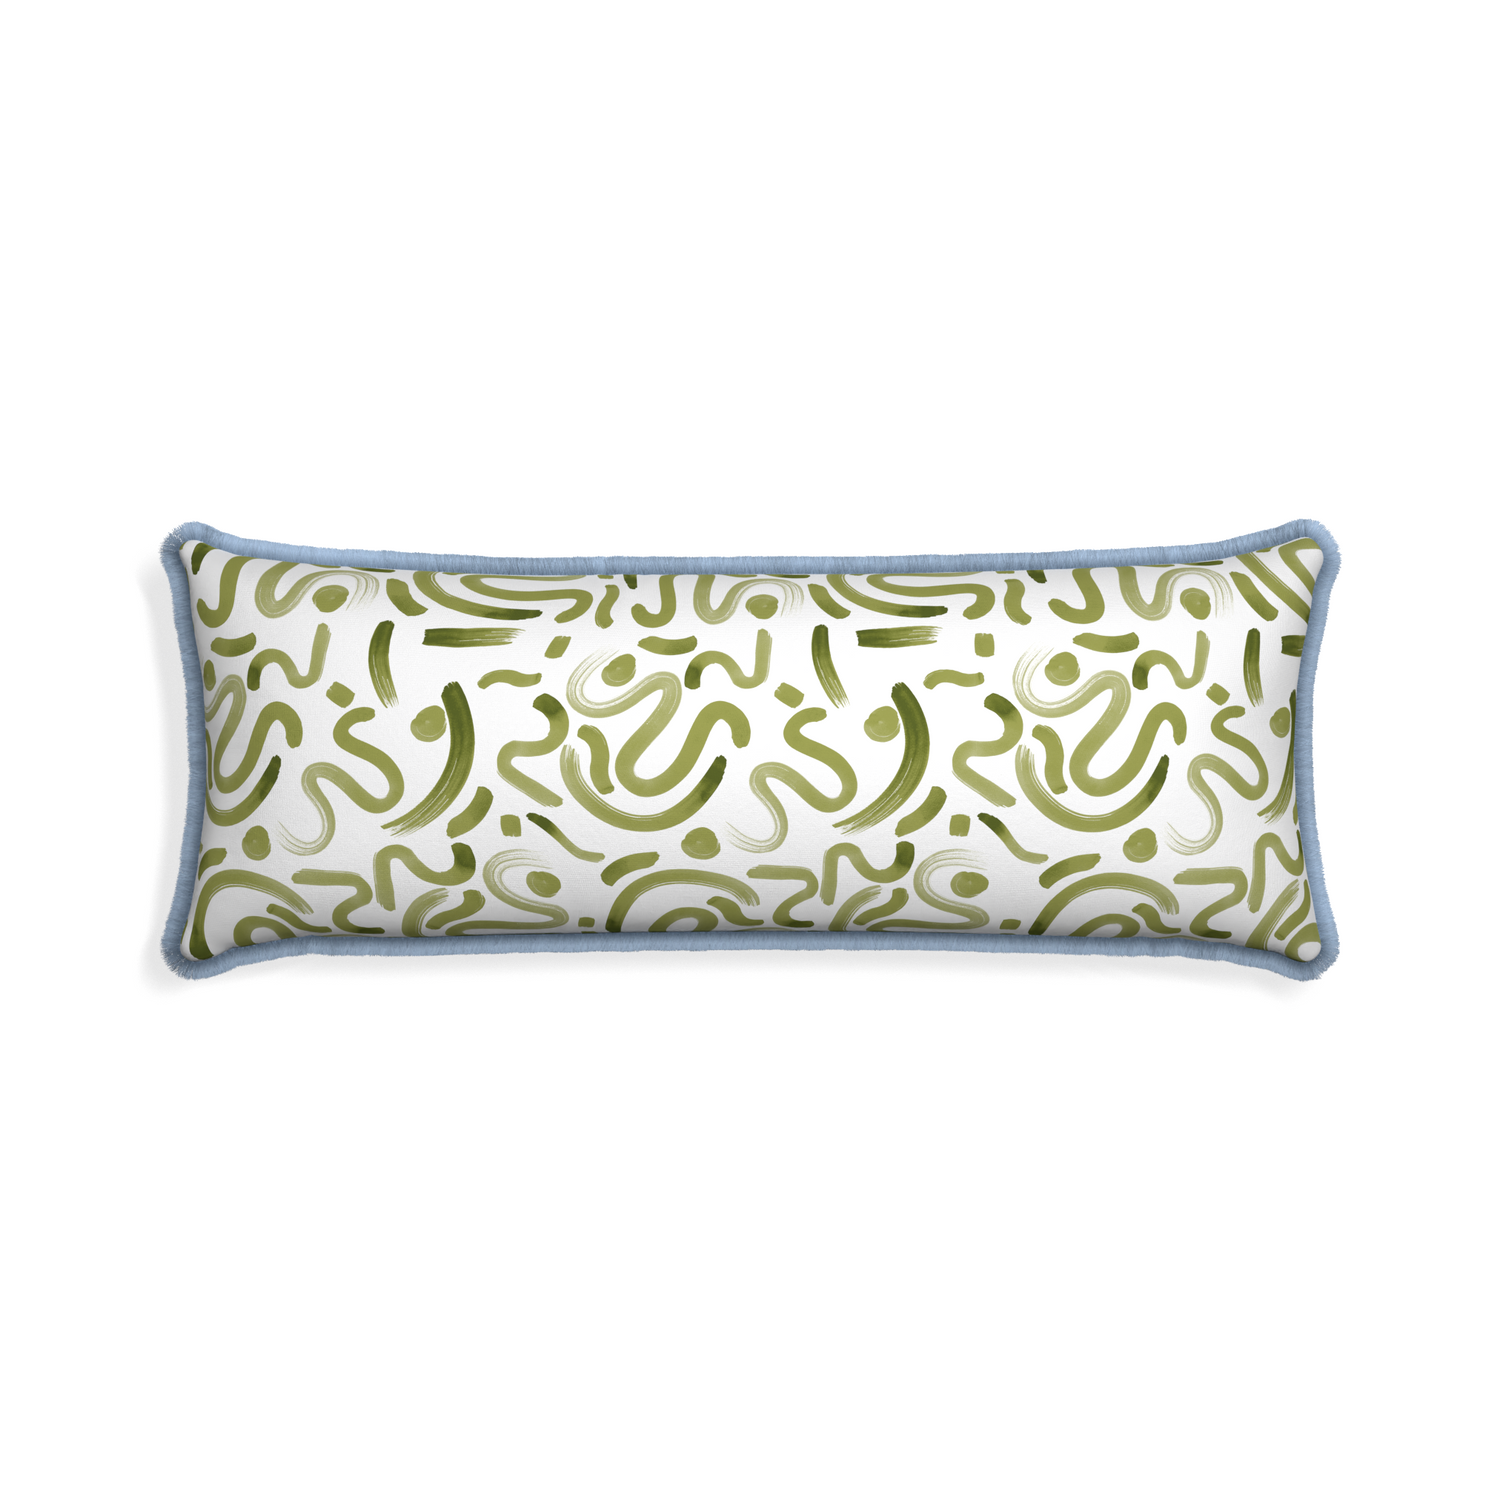 Xl-lumbar hockney moss custom pillow with sky fringe on white background